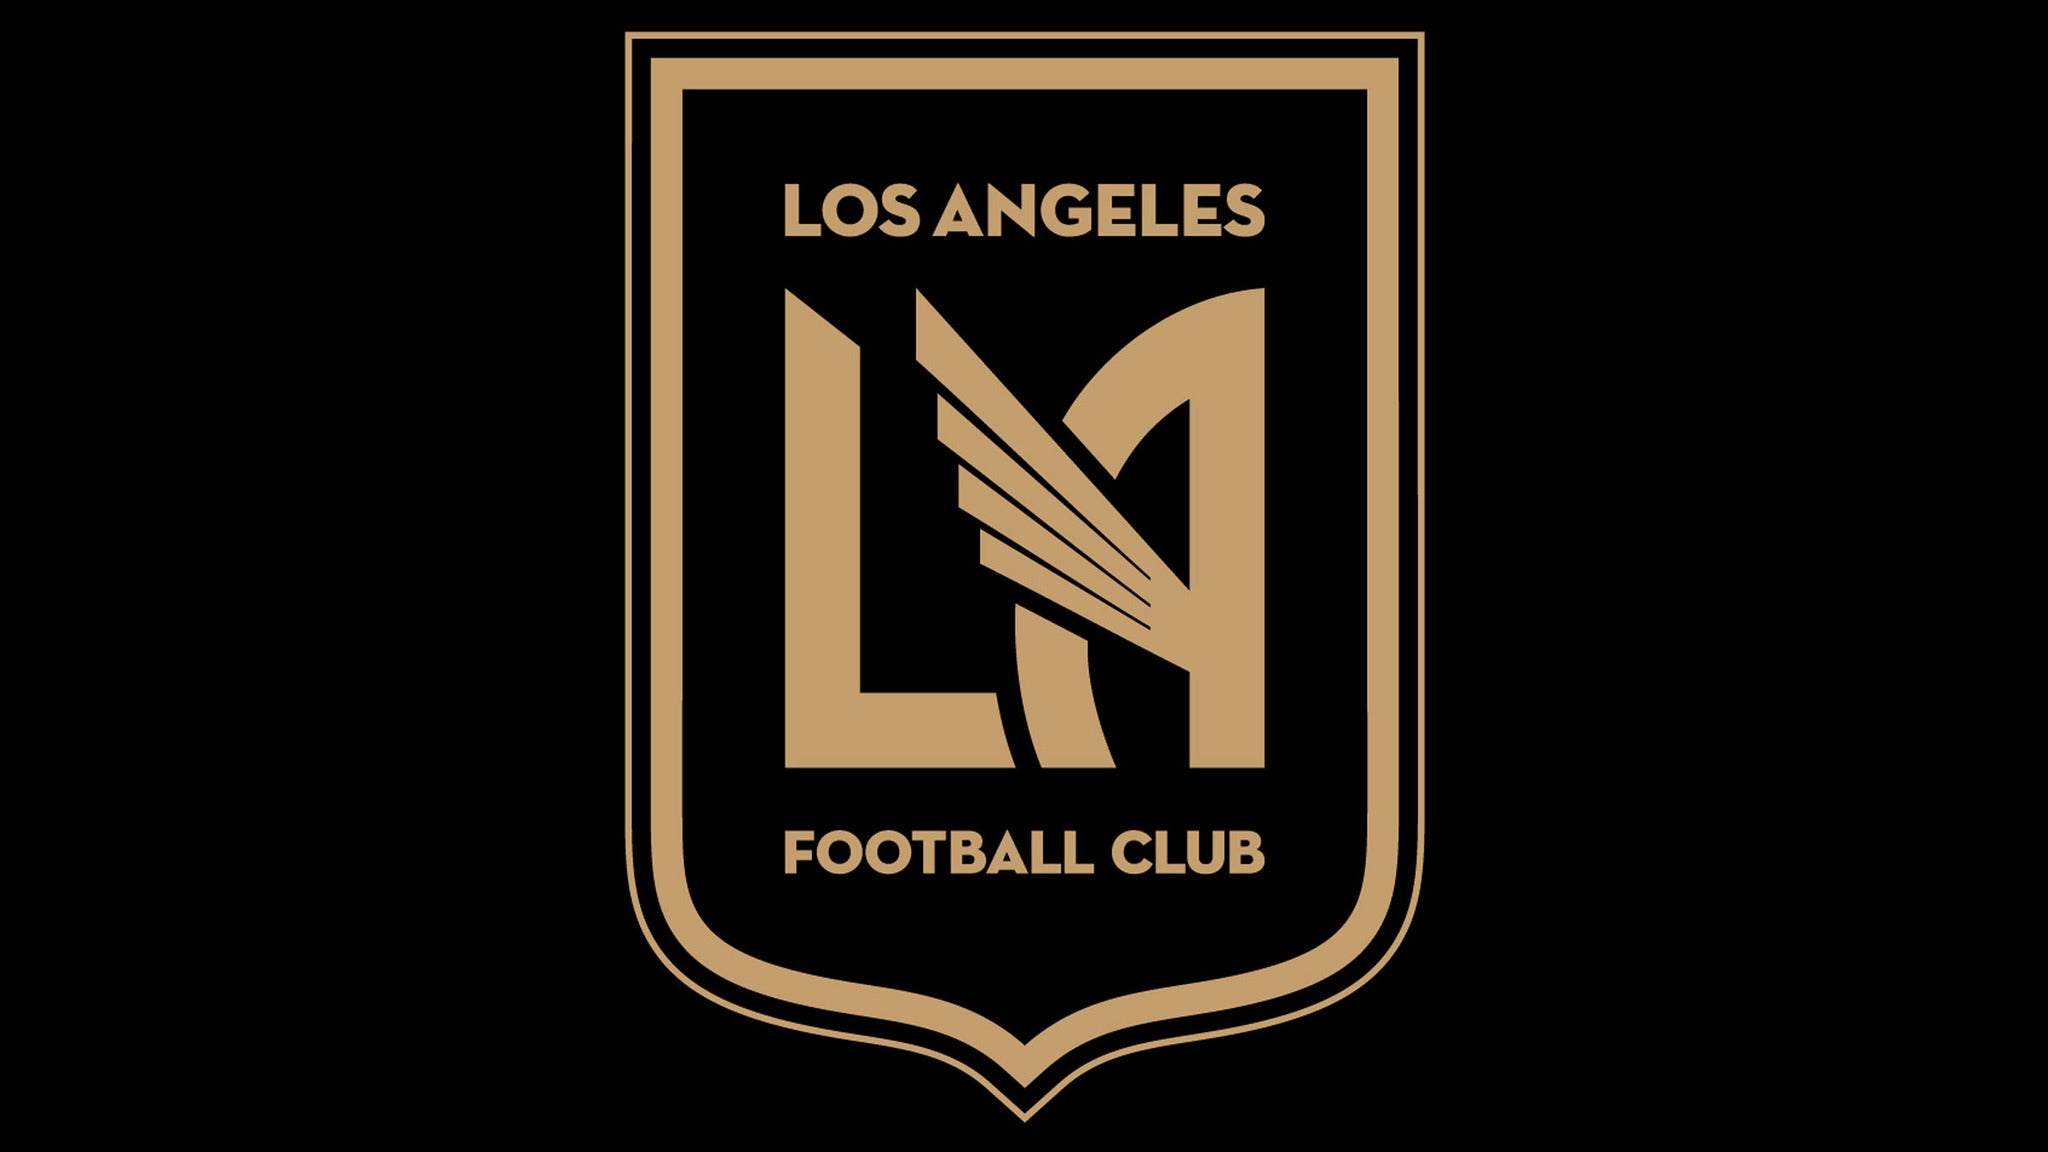 Main image for event titled Los Angeles Football Club vs. LA Galaxy